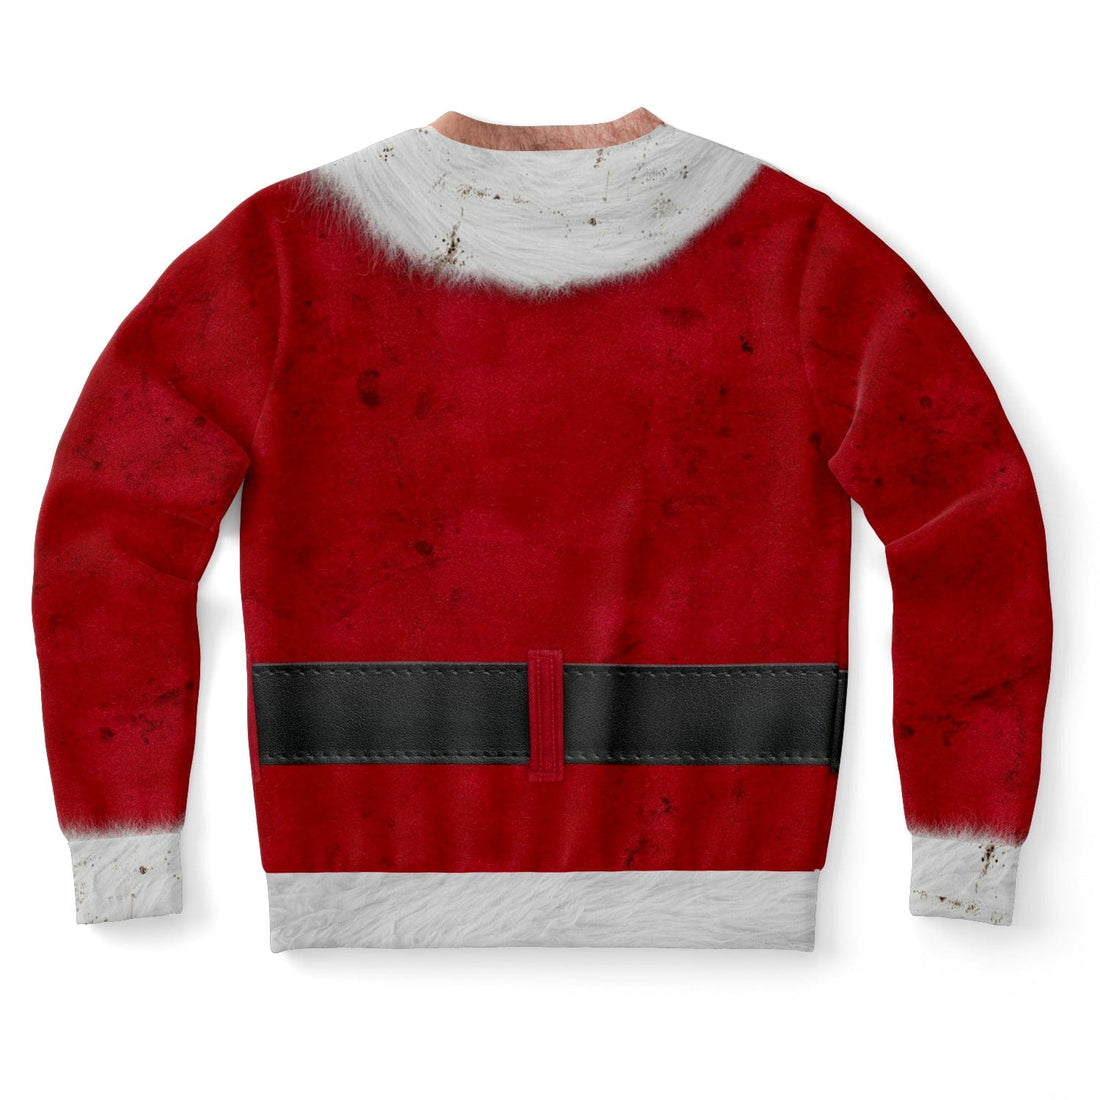 SUBLIMINATOR Bad Santa Ugly Christmas Sweaters Sweatshirt